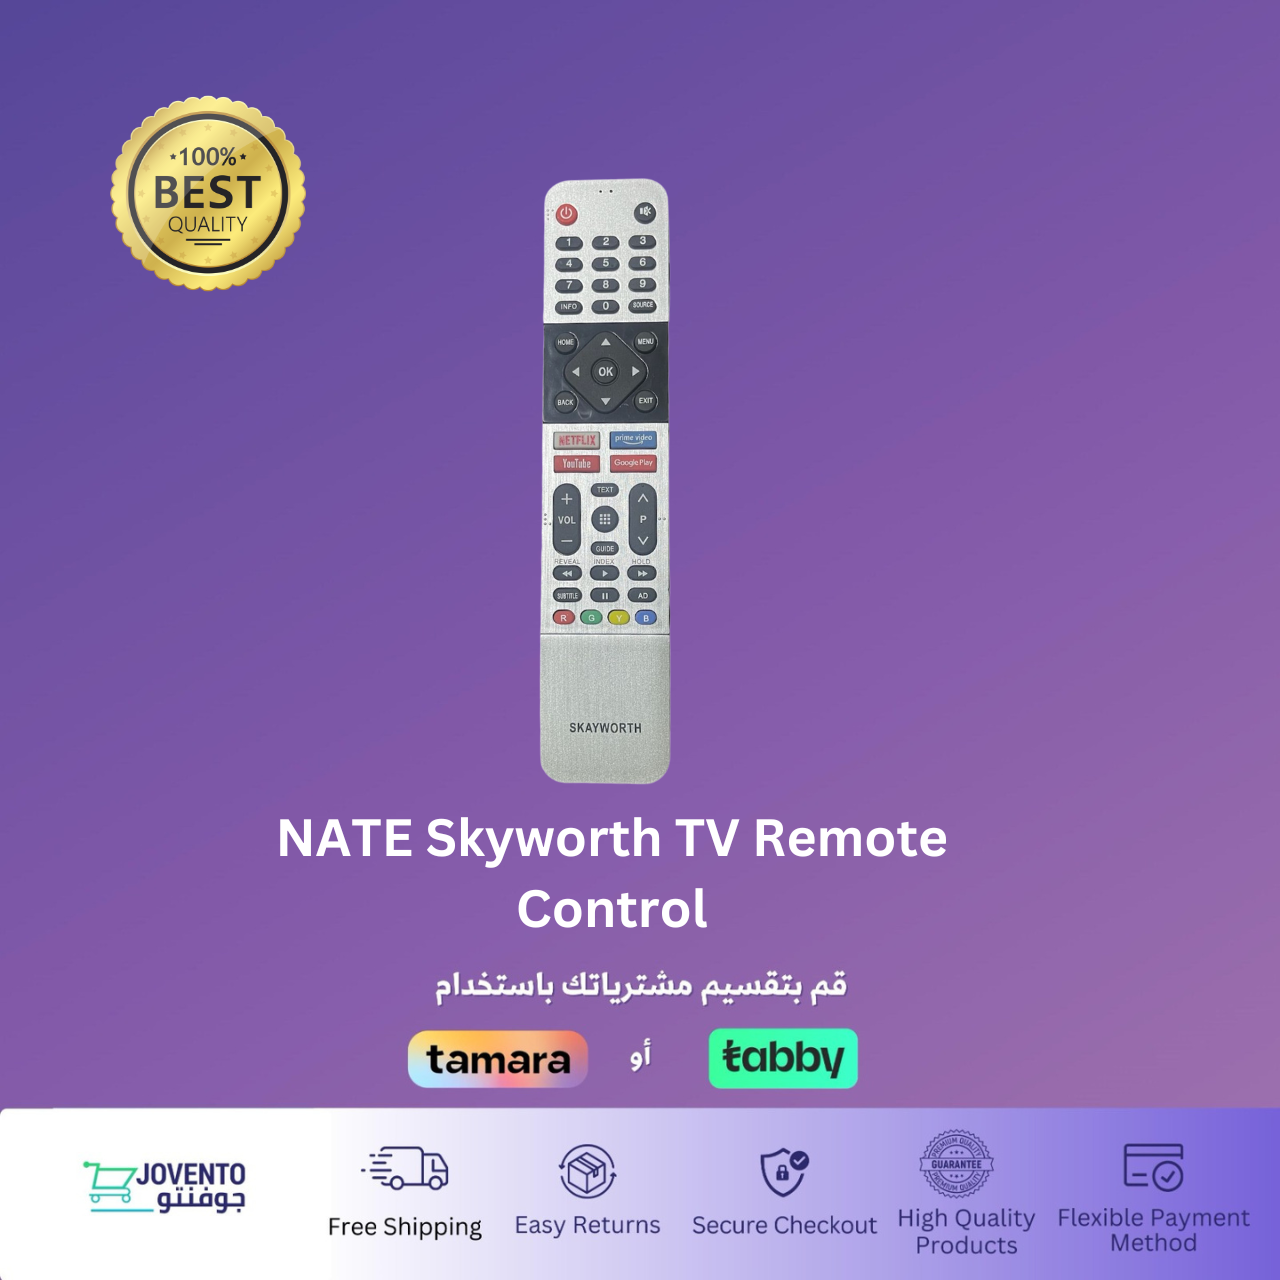 NATE Skyworth TV Remote Control